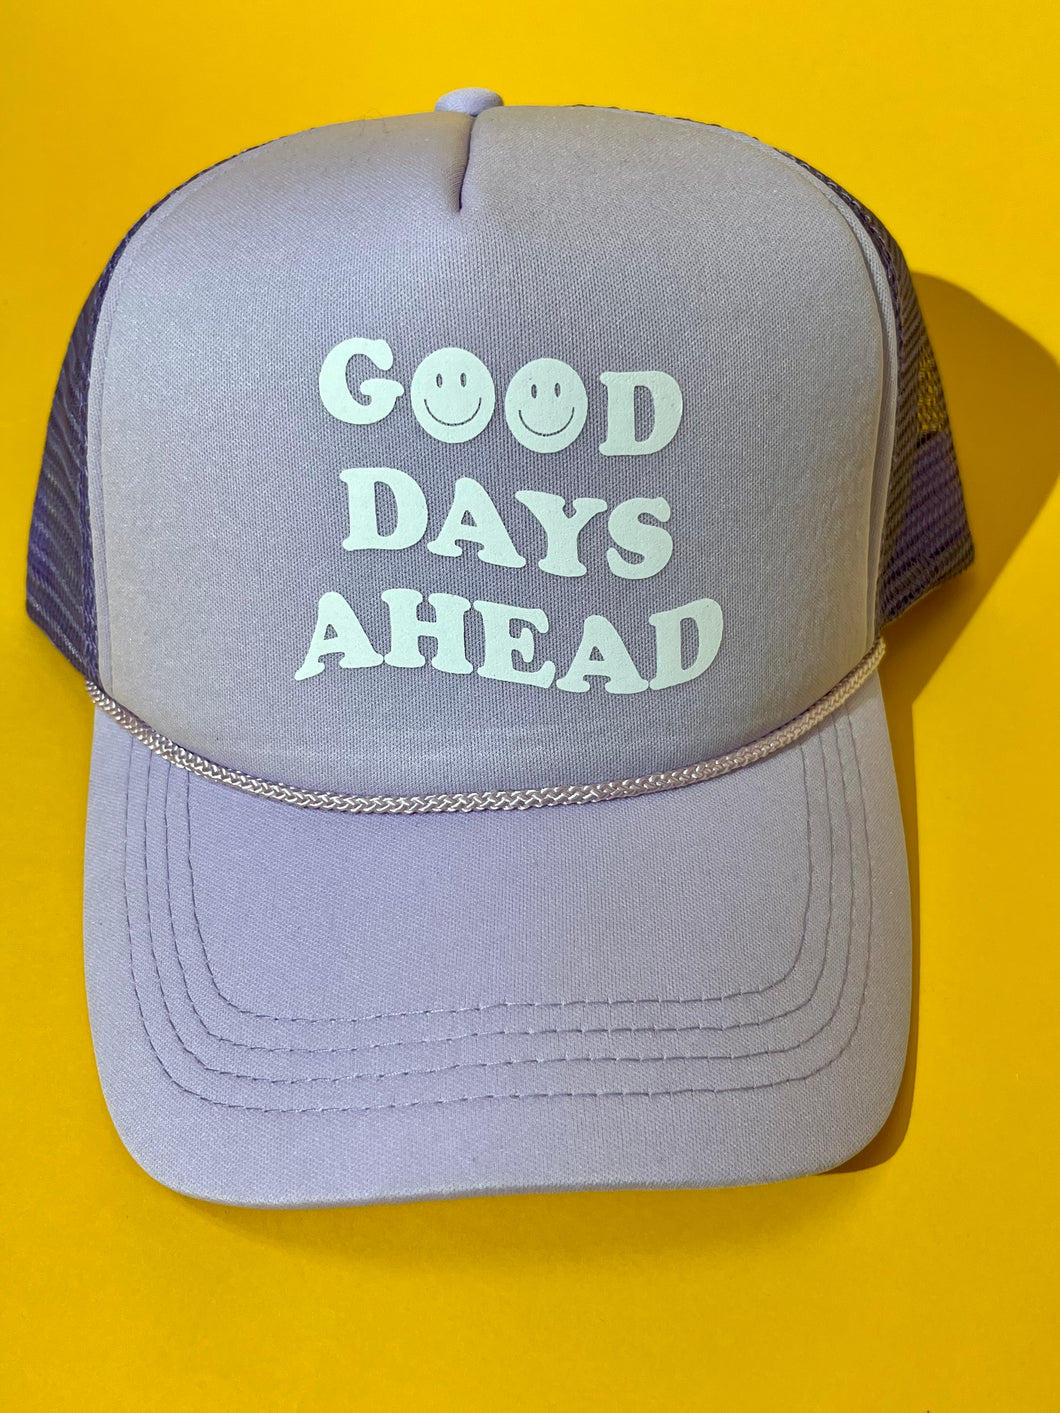 Good days ahead lavender trucker hat